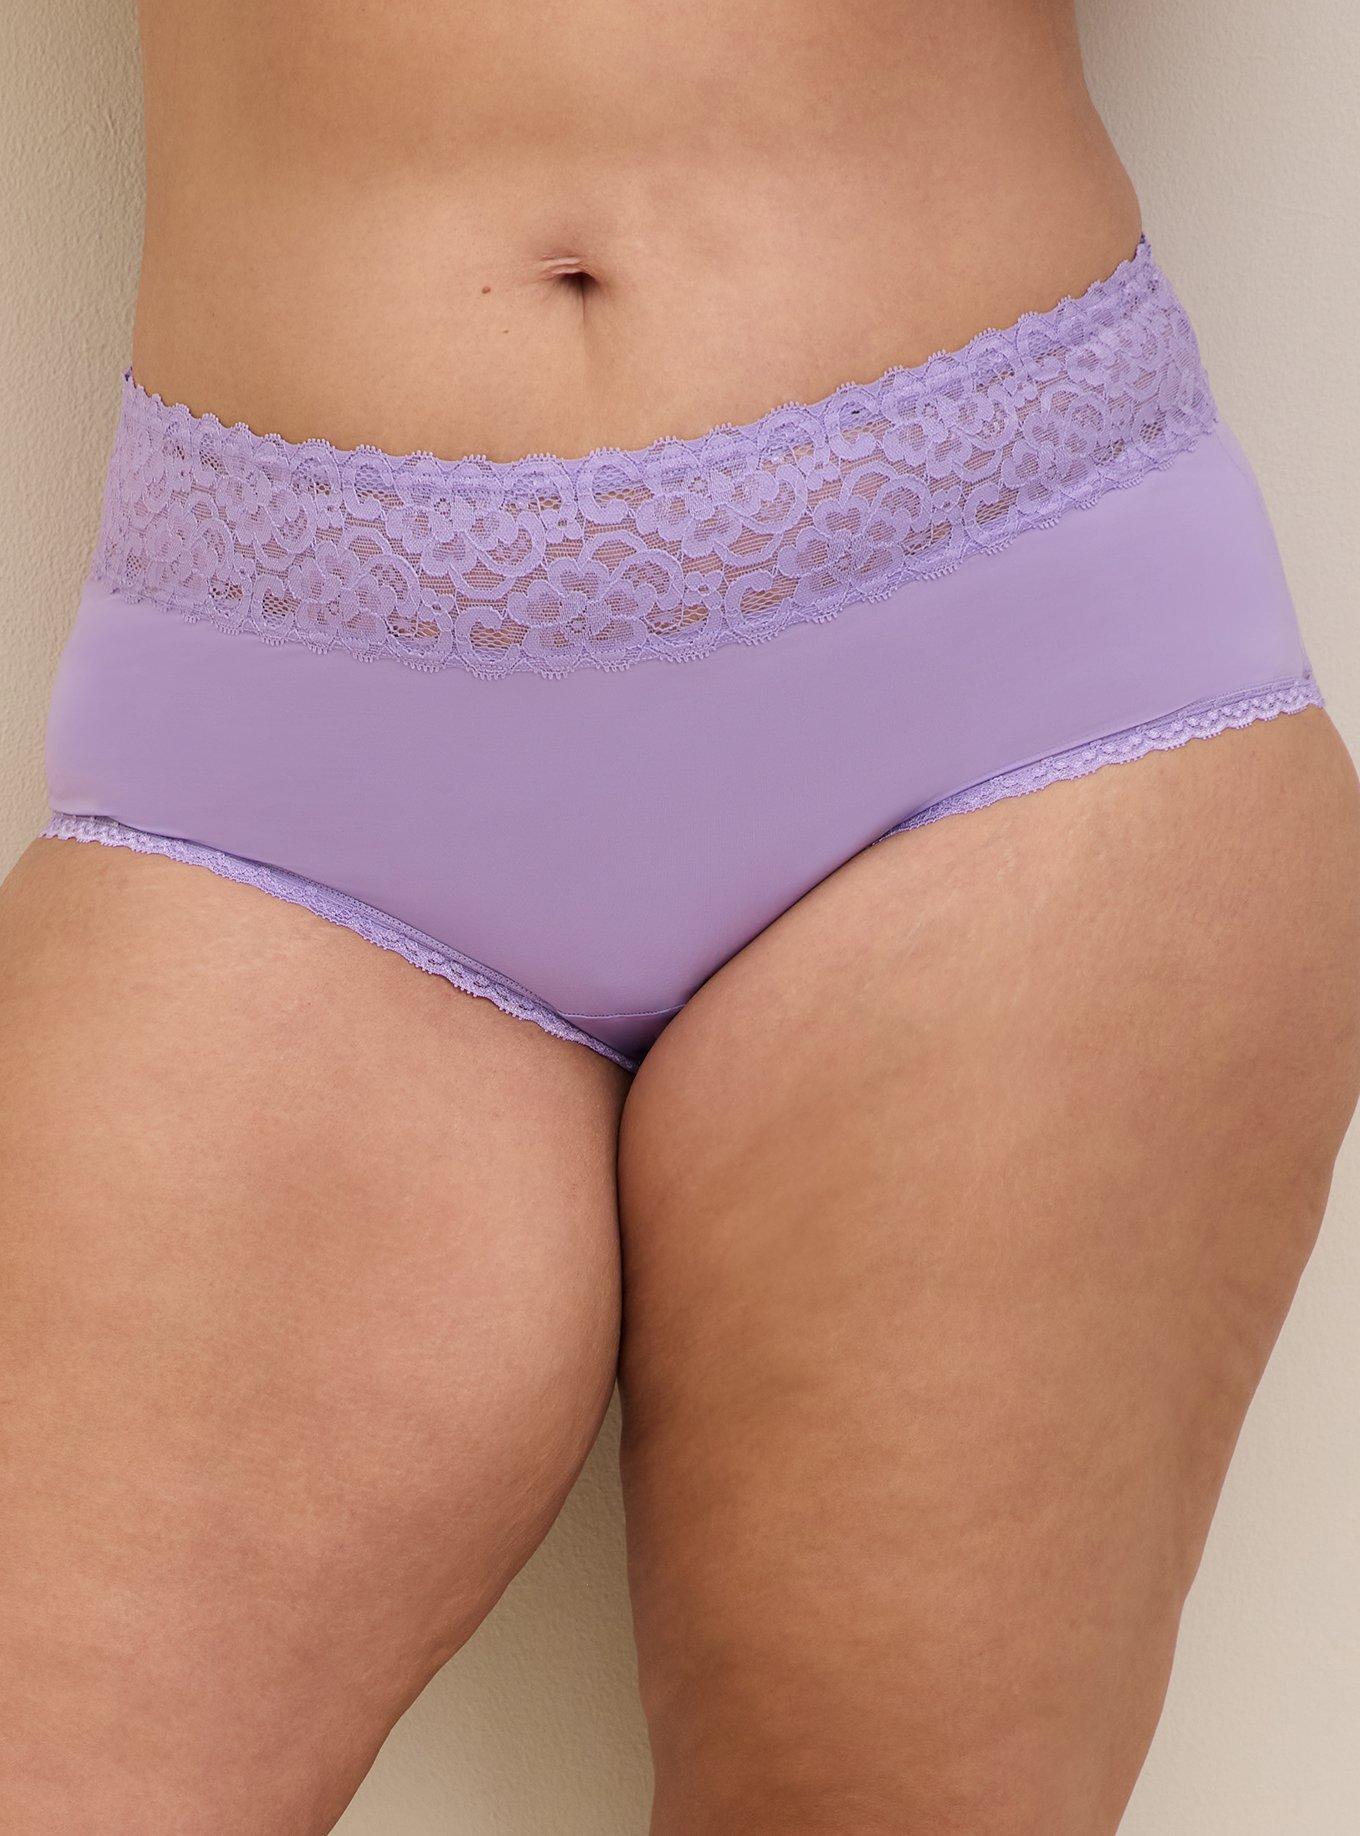 Tuscom Women's Lace Underpants Open Crotch Panties Low Waist Briefs  Underwear